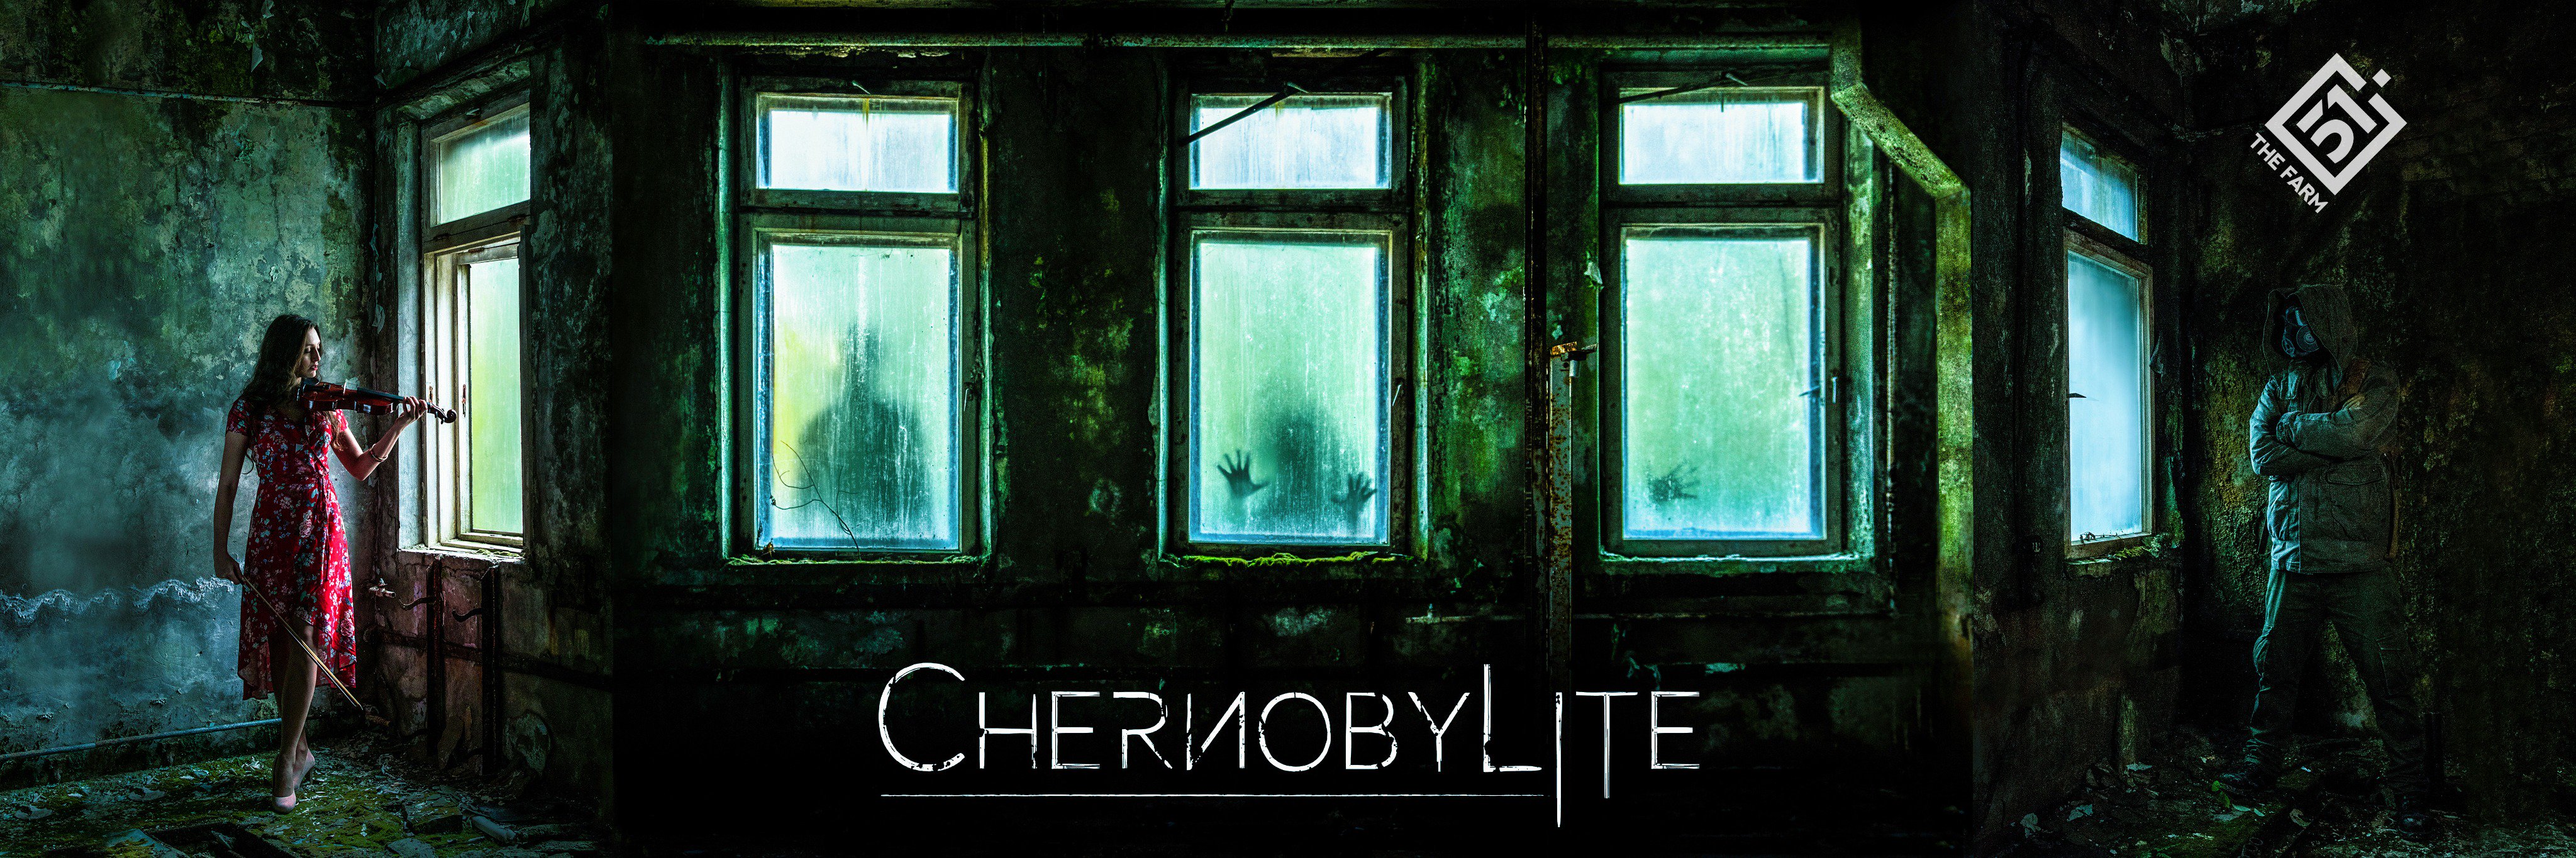 Poster Chernobyl Video Games ChernobyLite 4096x1365